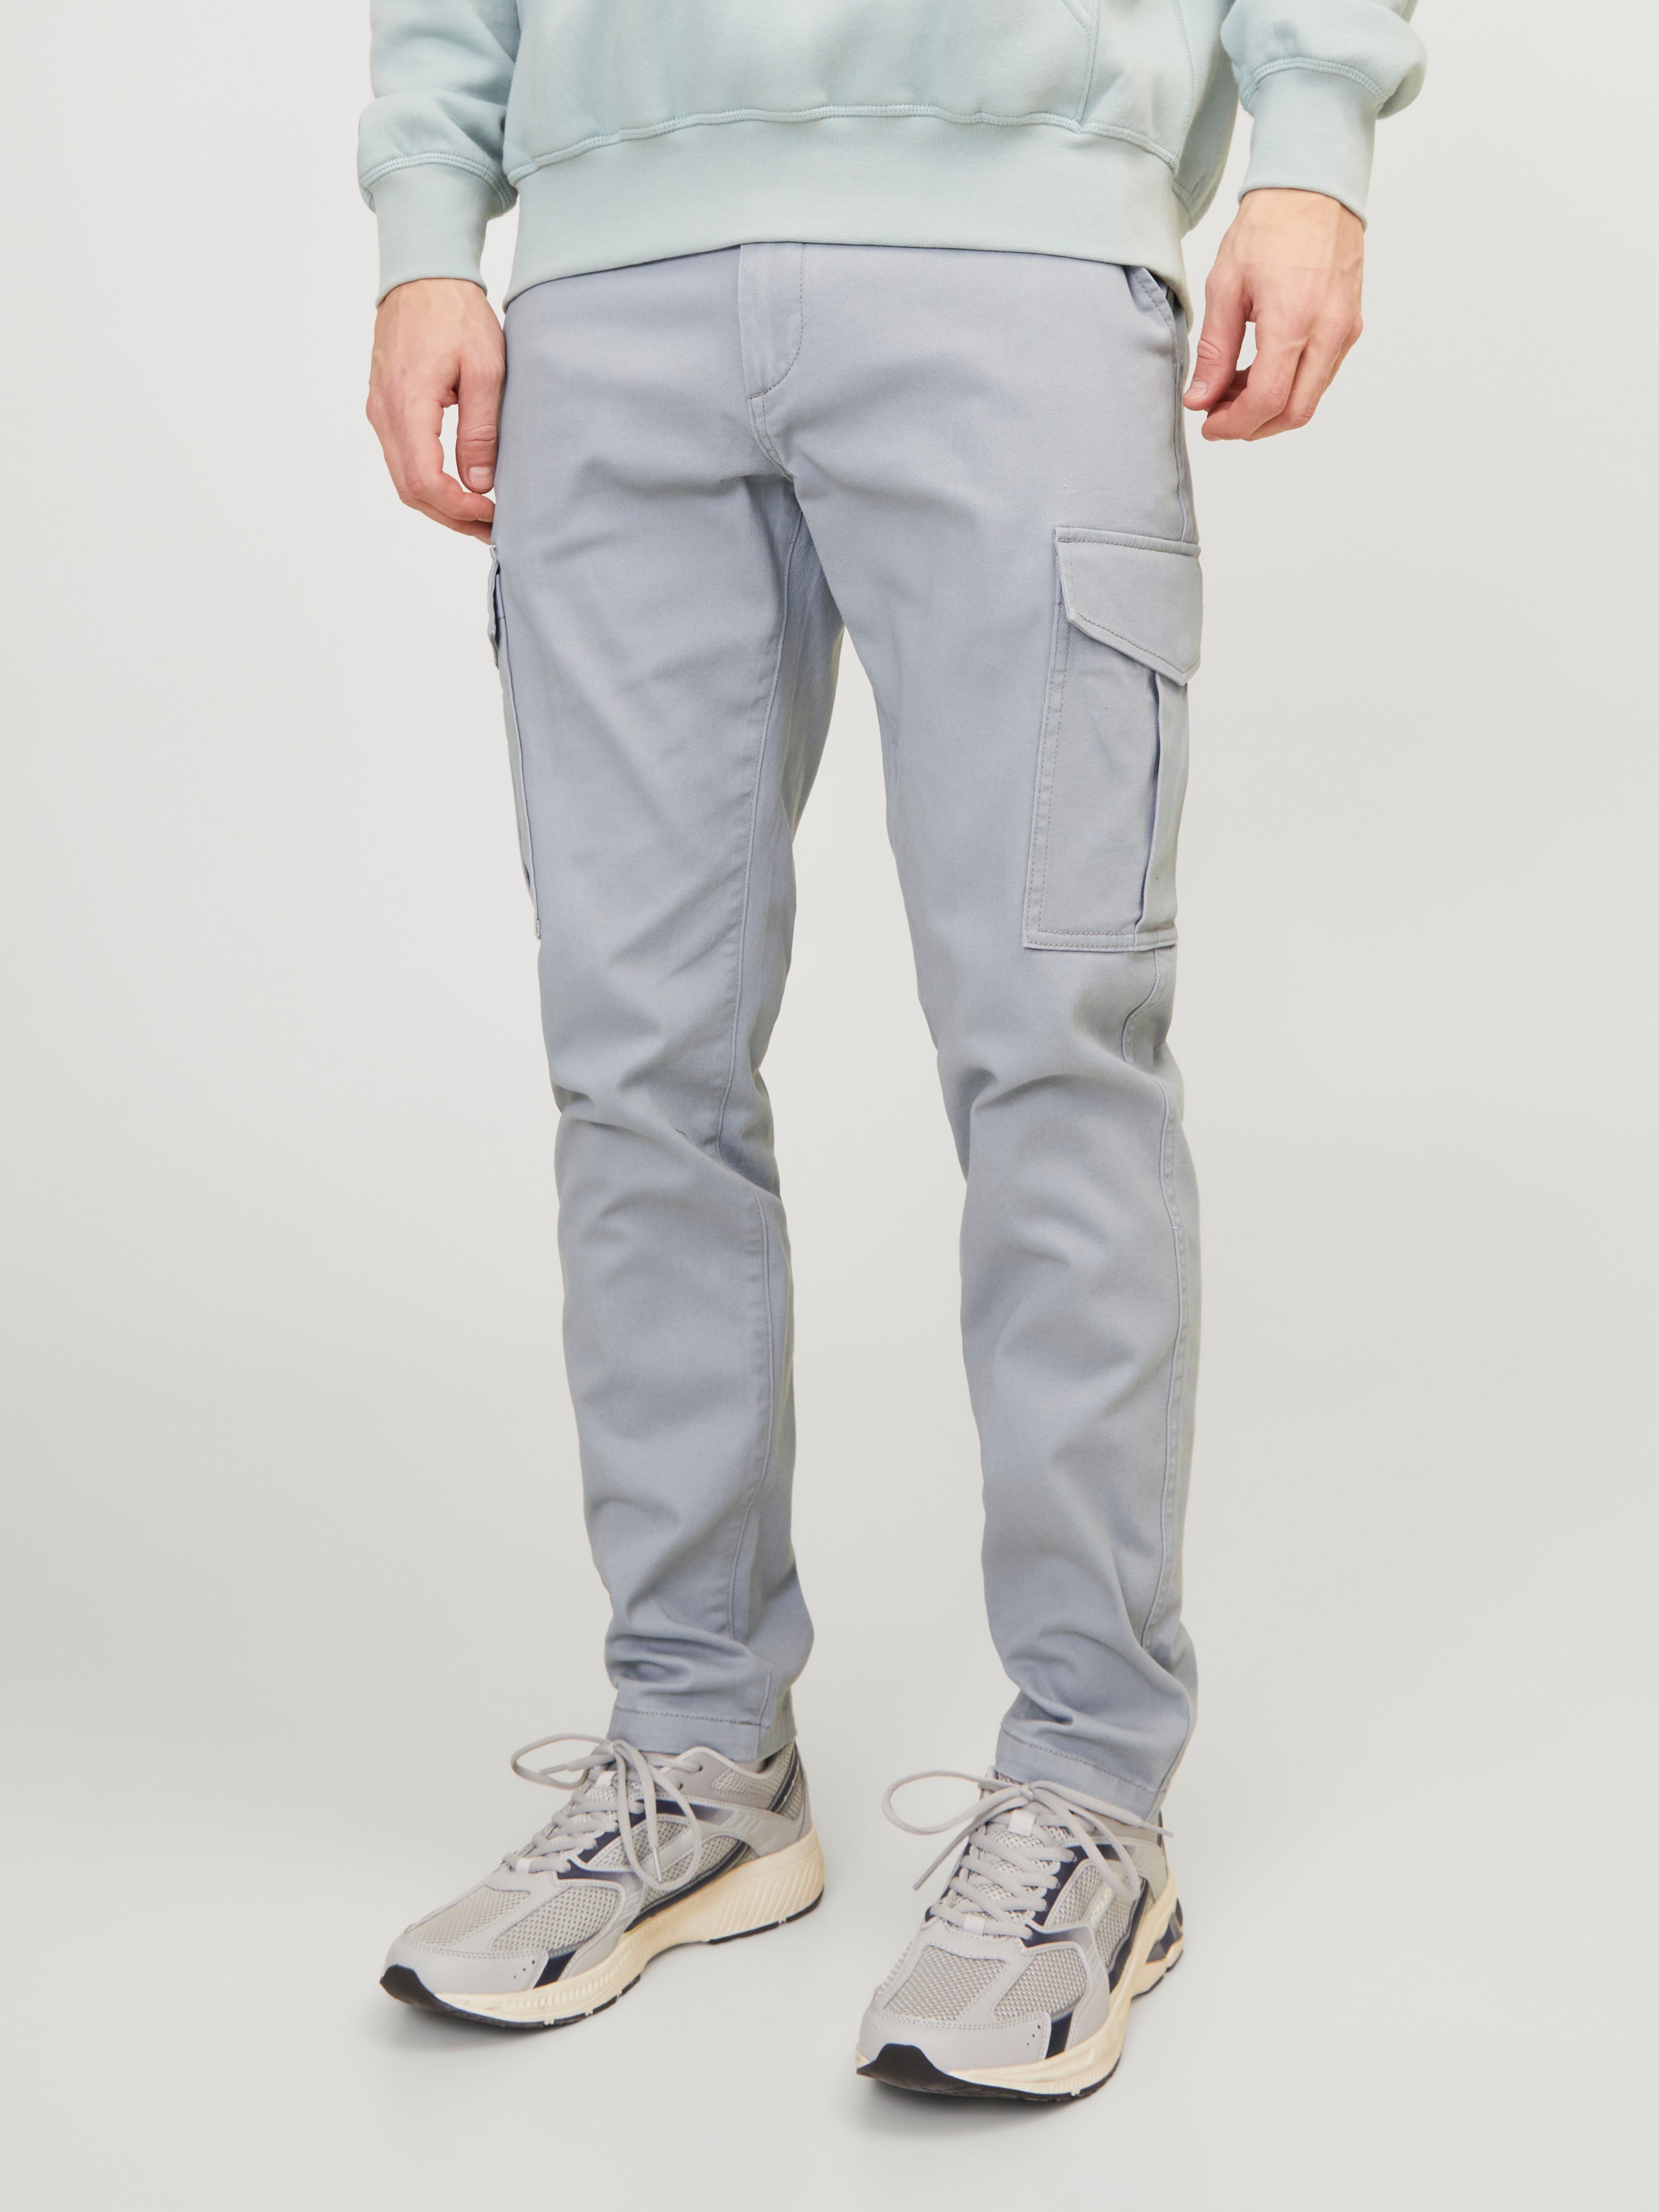 Buy Blue Jeans for Men by Produkt By Jack & Jones Online | Ajio.com